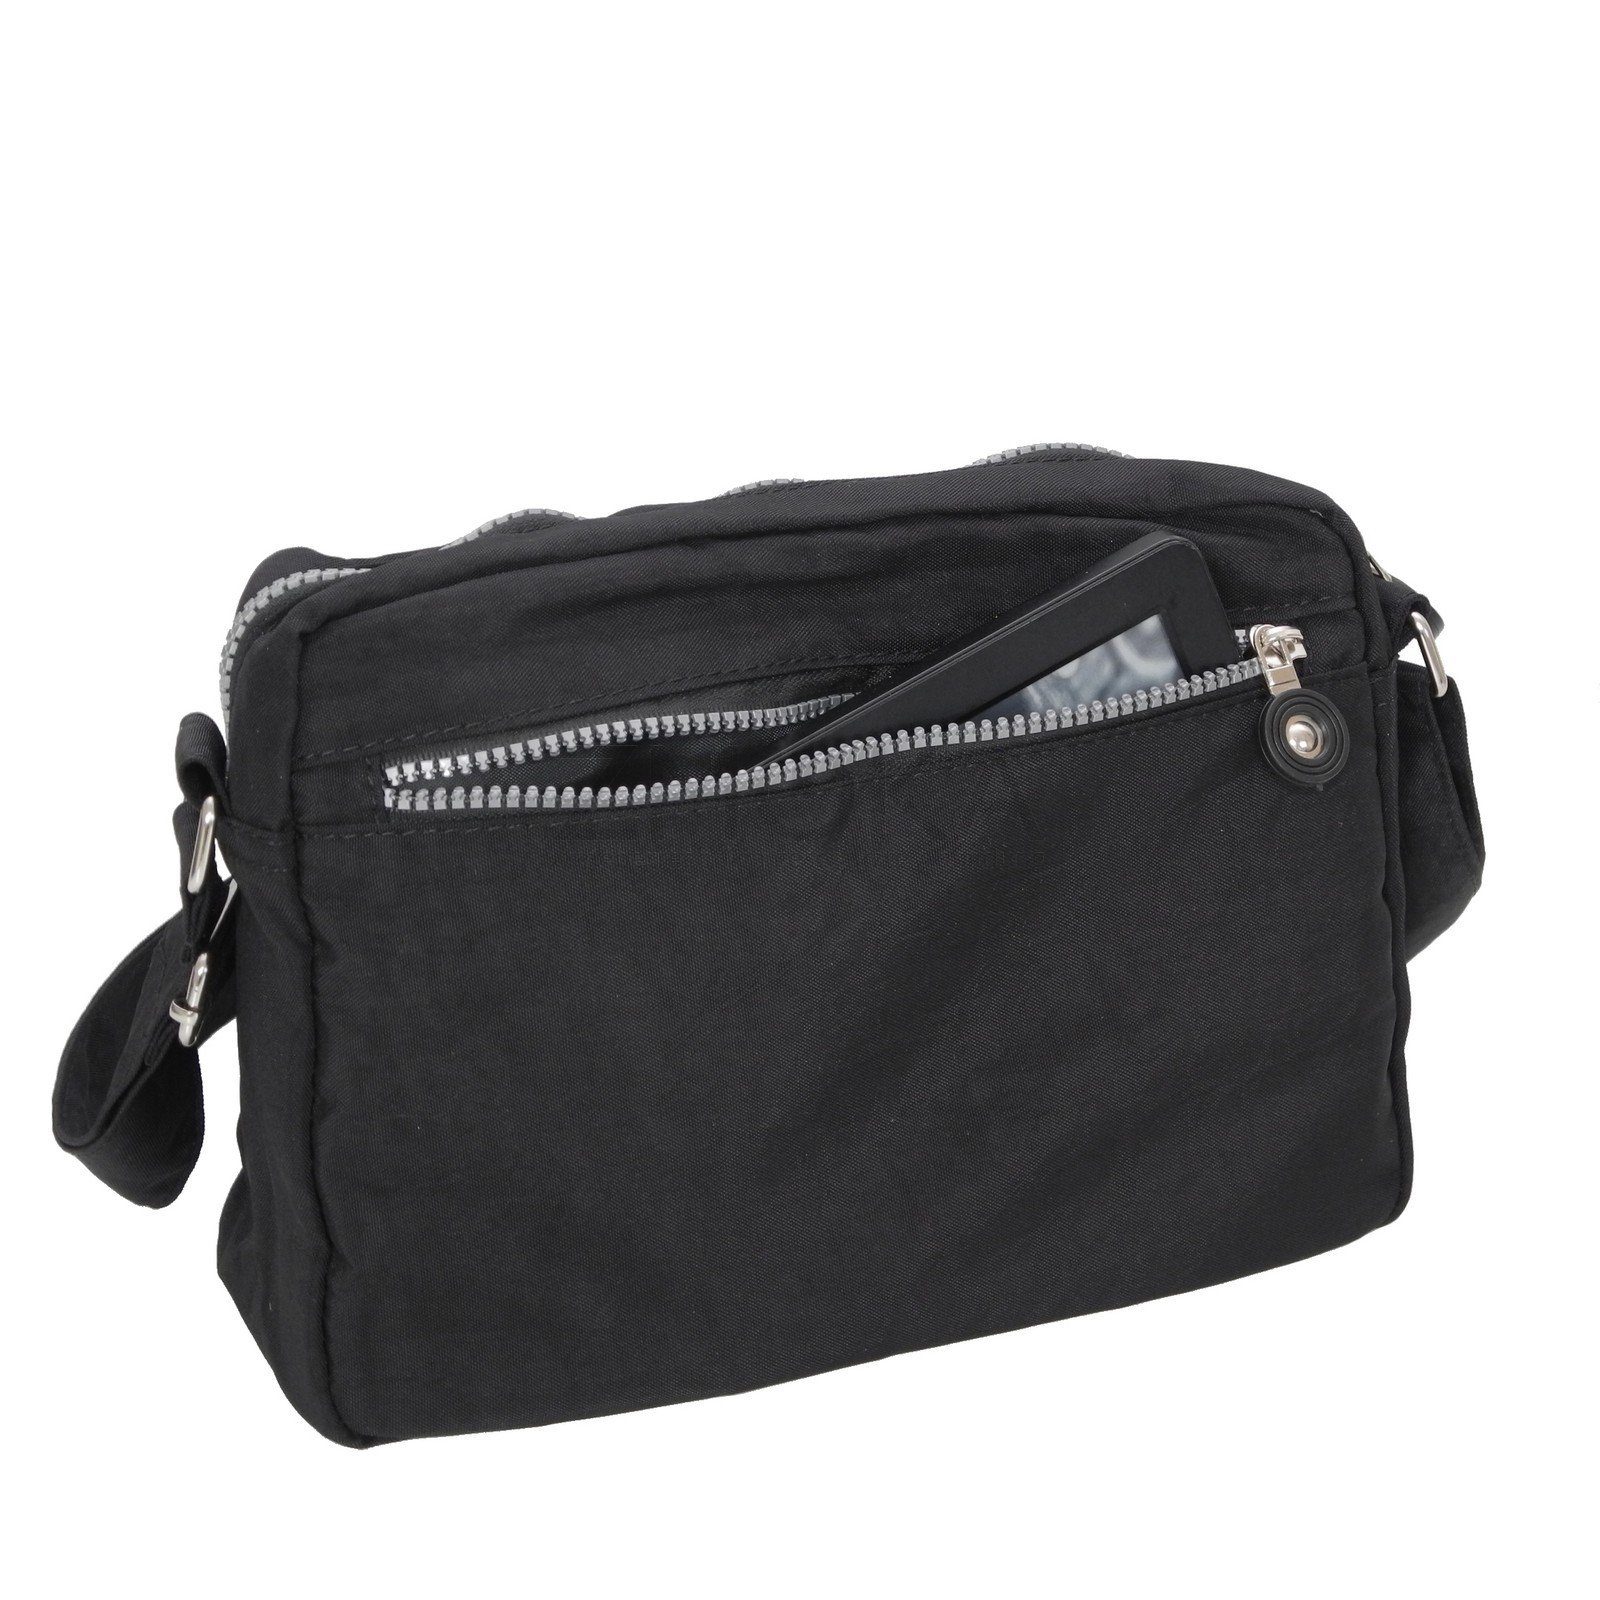 Umhängetasche Auswahl Bag Bag - Street BAG STREET Crossbody Schwarz Stofftasche Umhängetasche